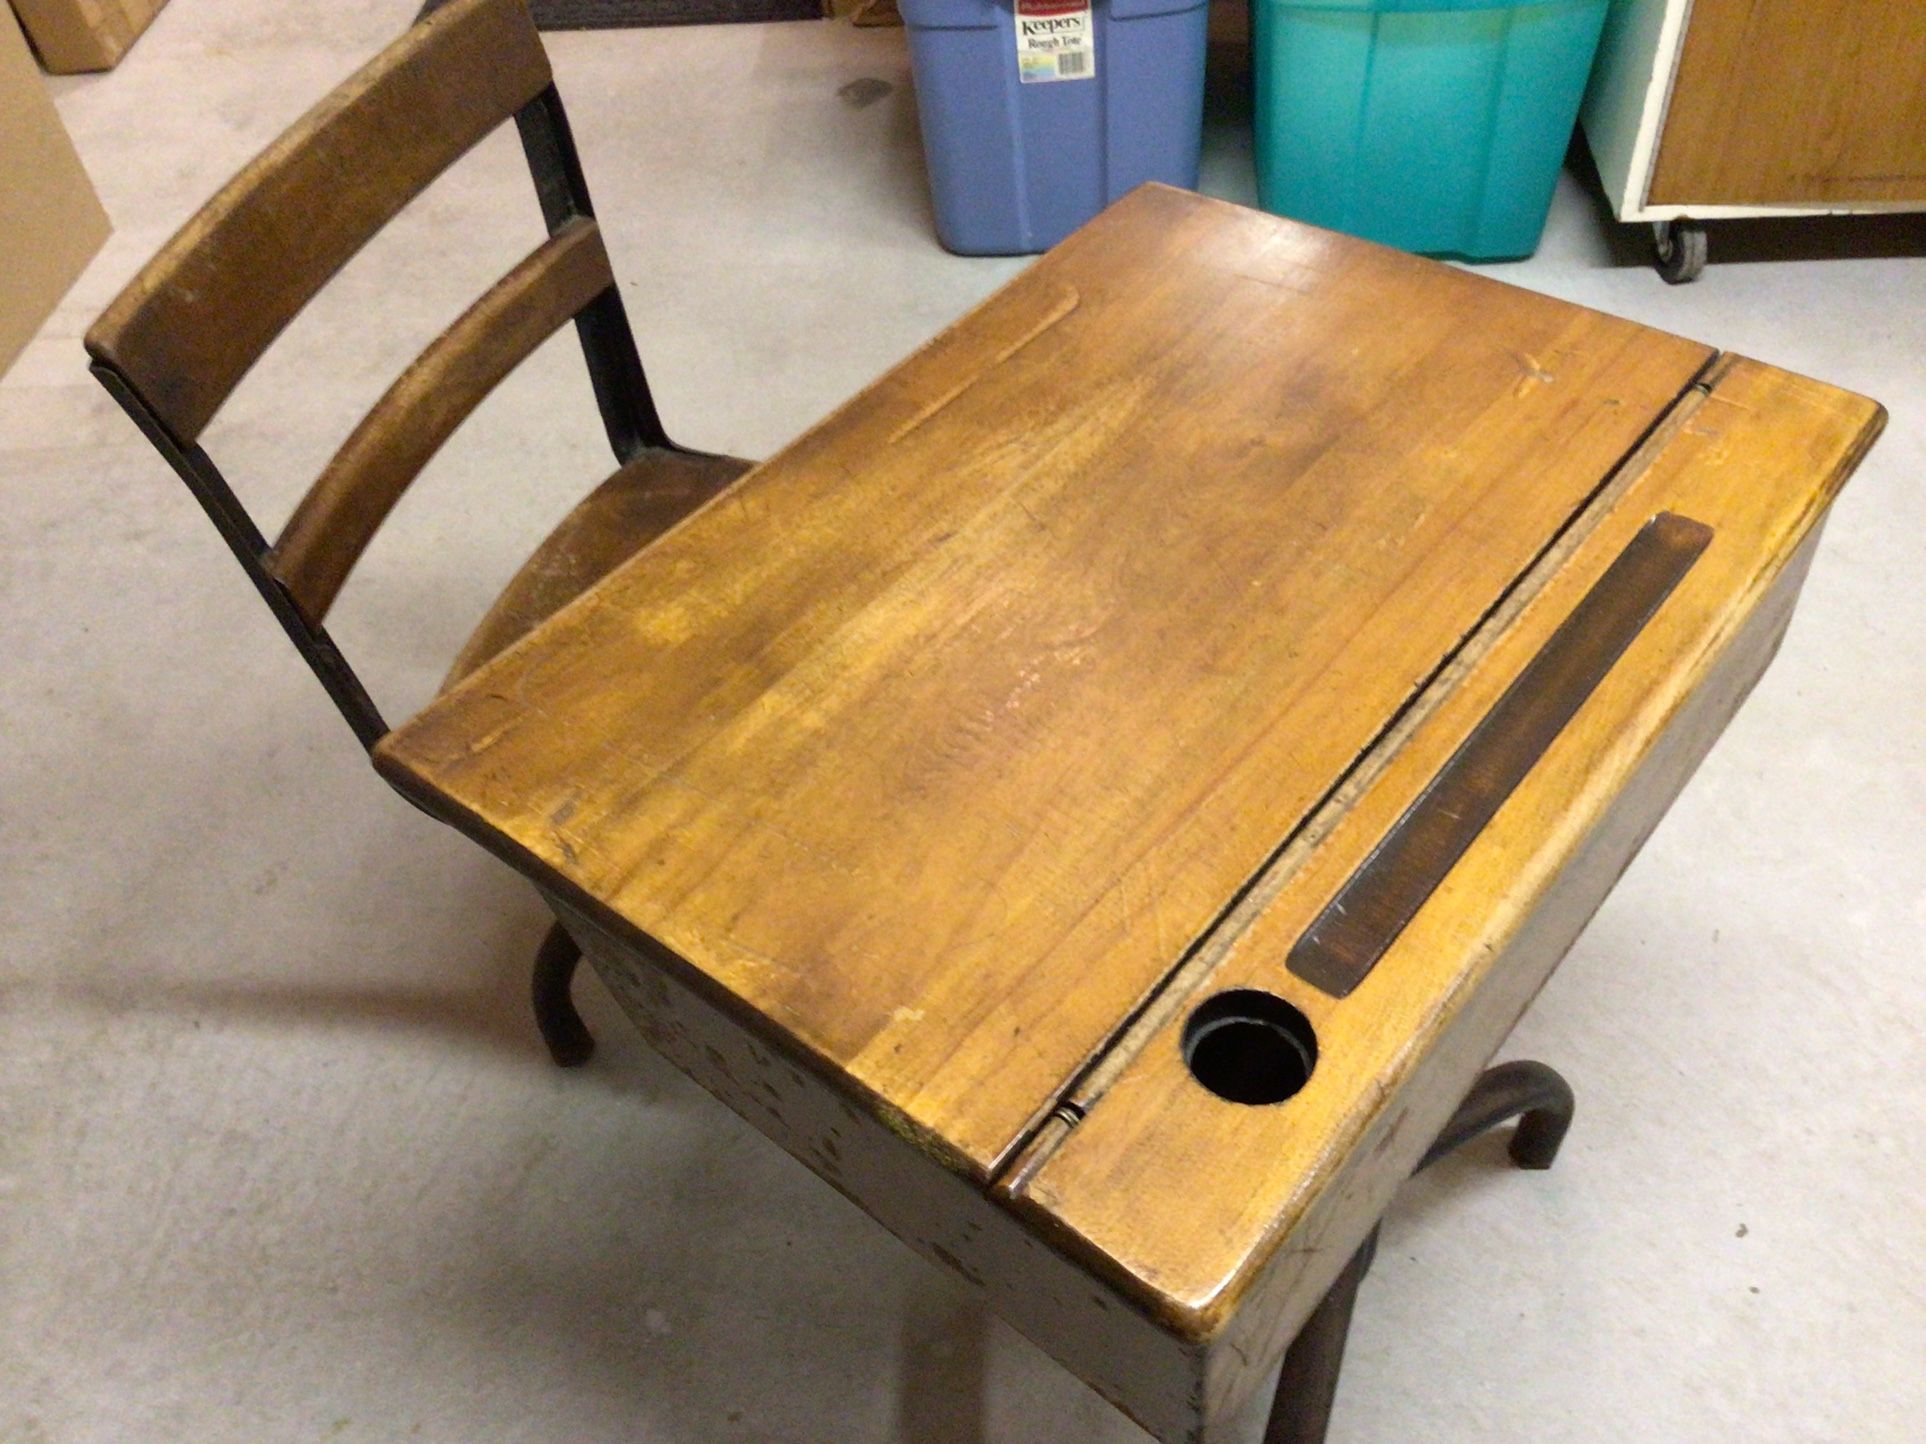 Vintage Wooden School Desk With Swivel Seat 1900’s - 1950’s